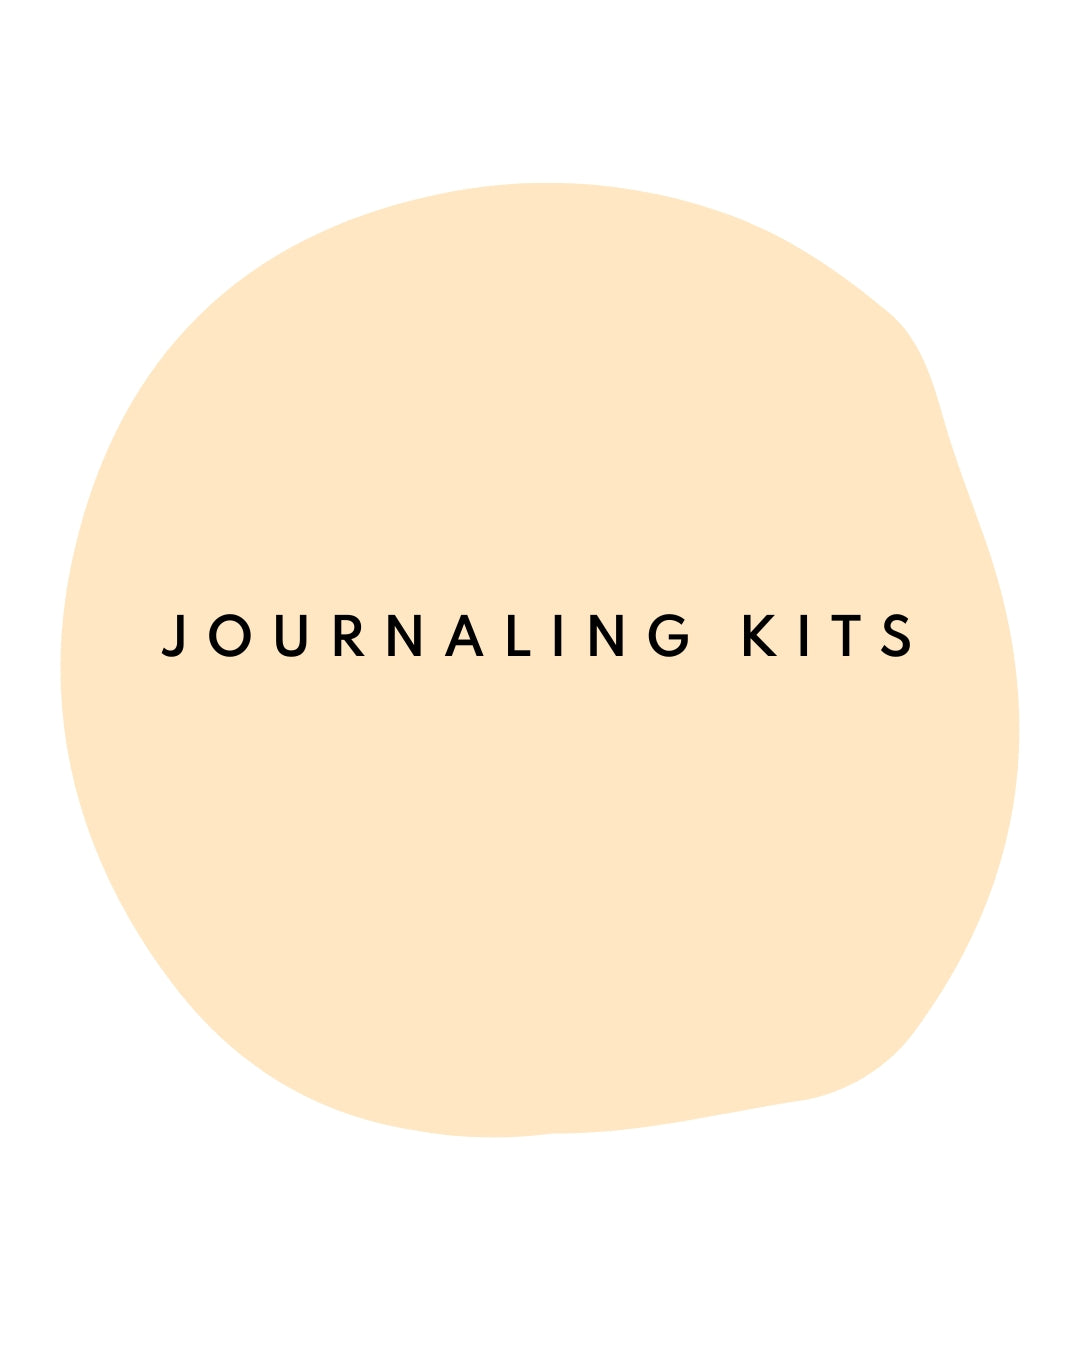 Journal kits